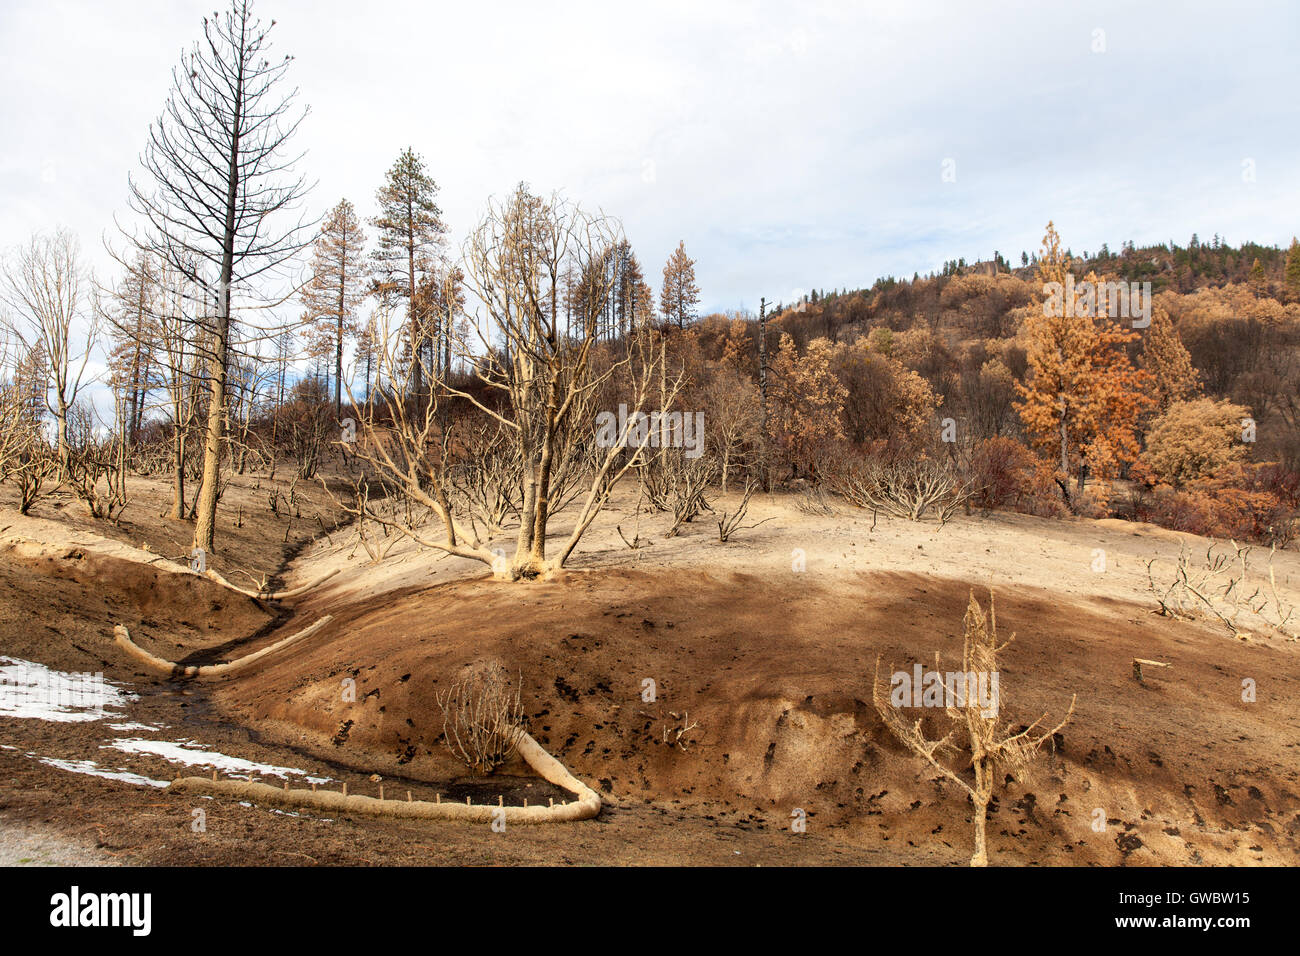 Post fire soil erosion mitigation works with mulch and check dams near Yosemite California USA Stock Photo